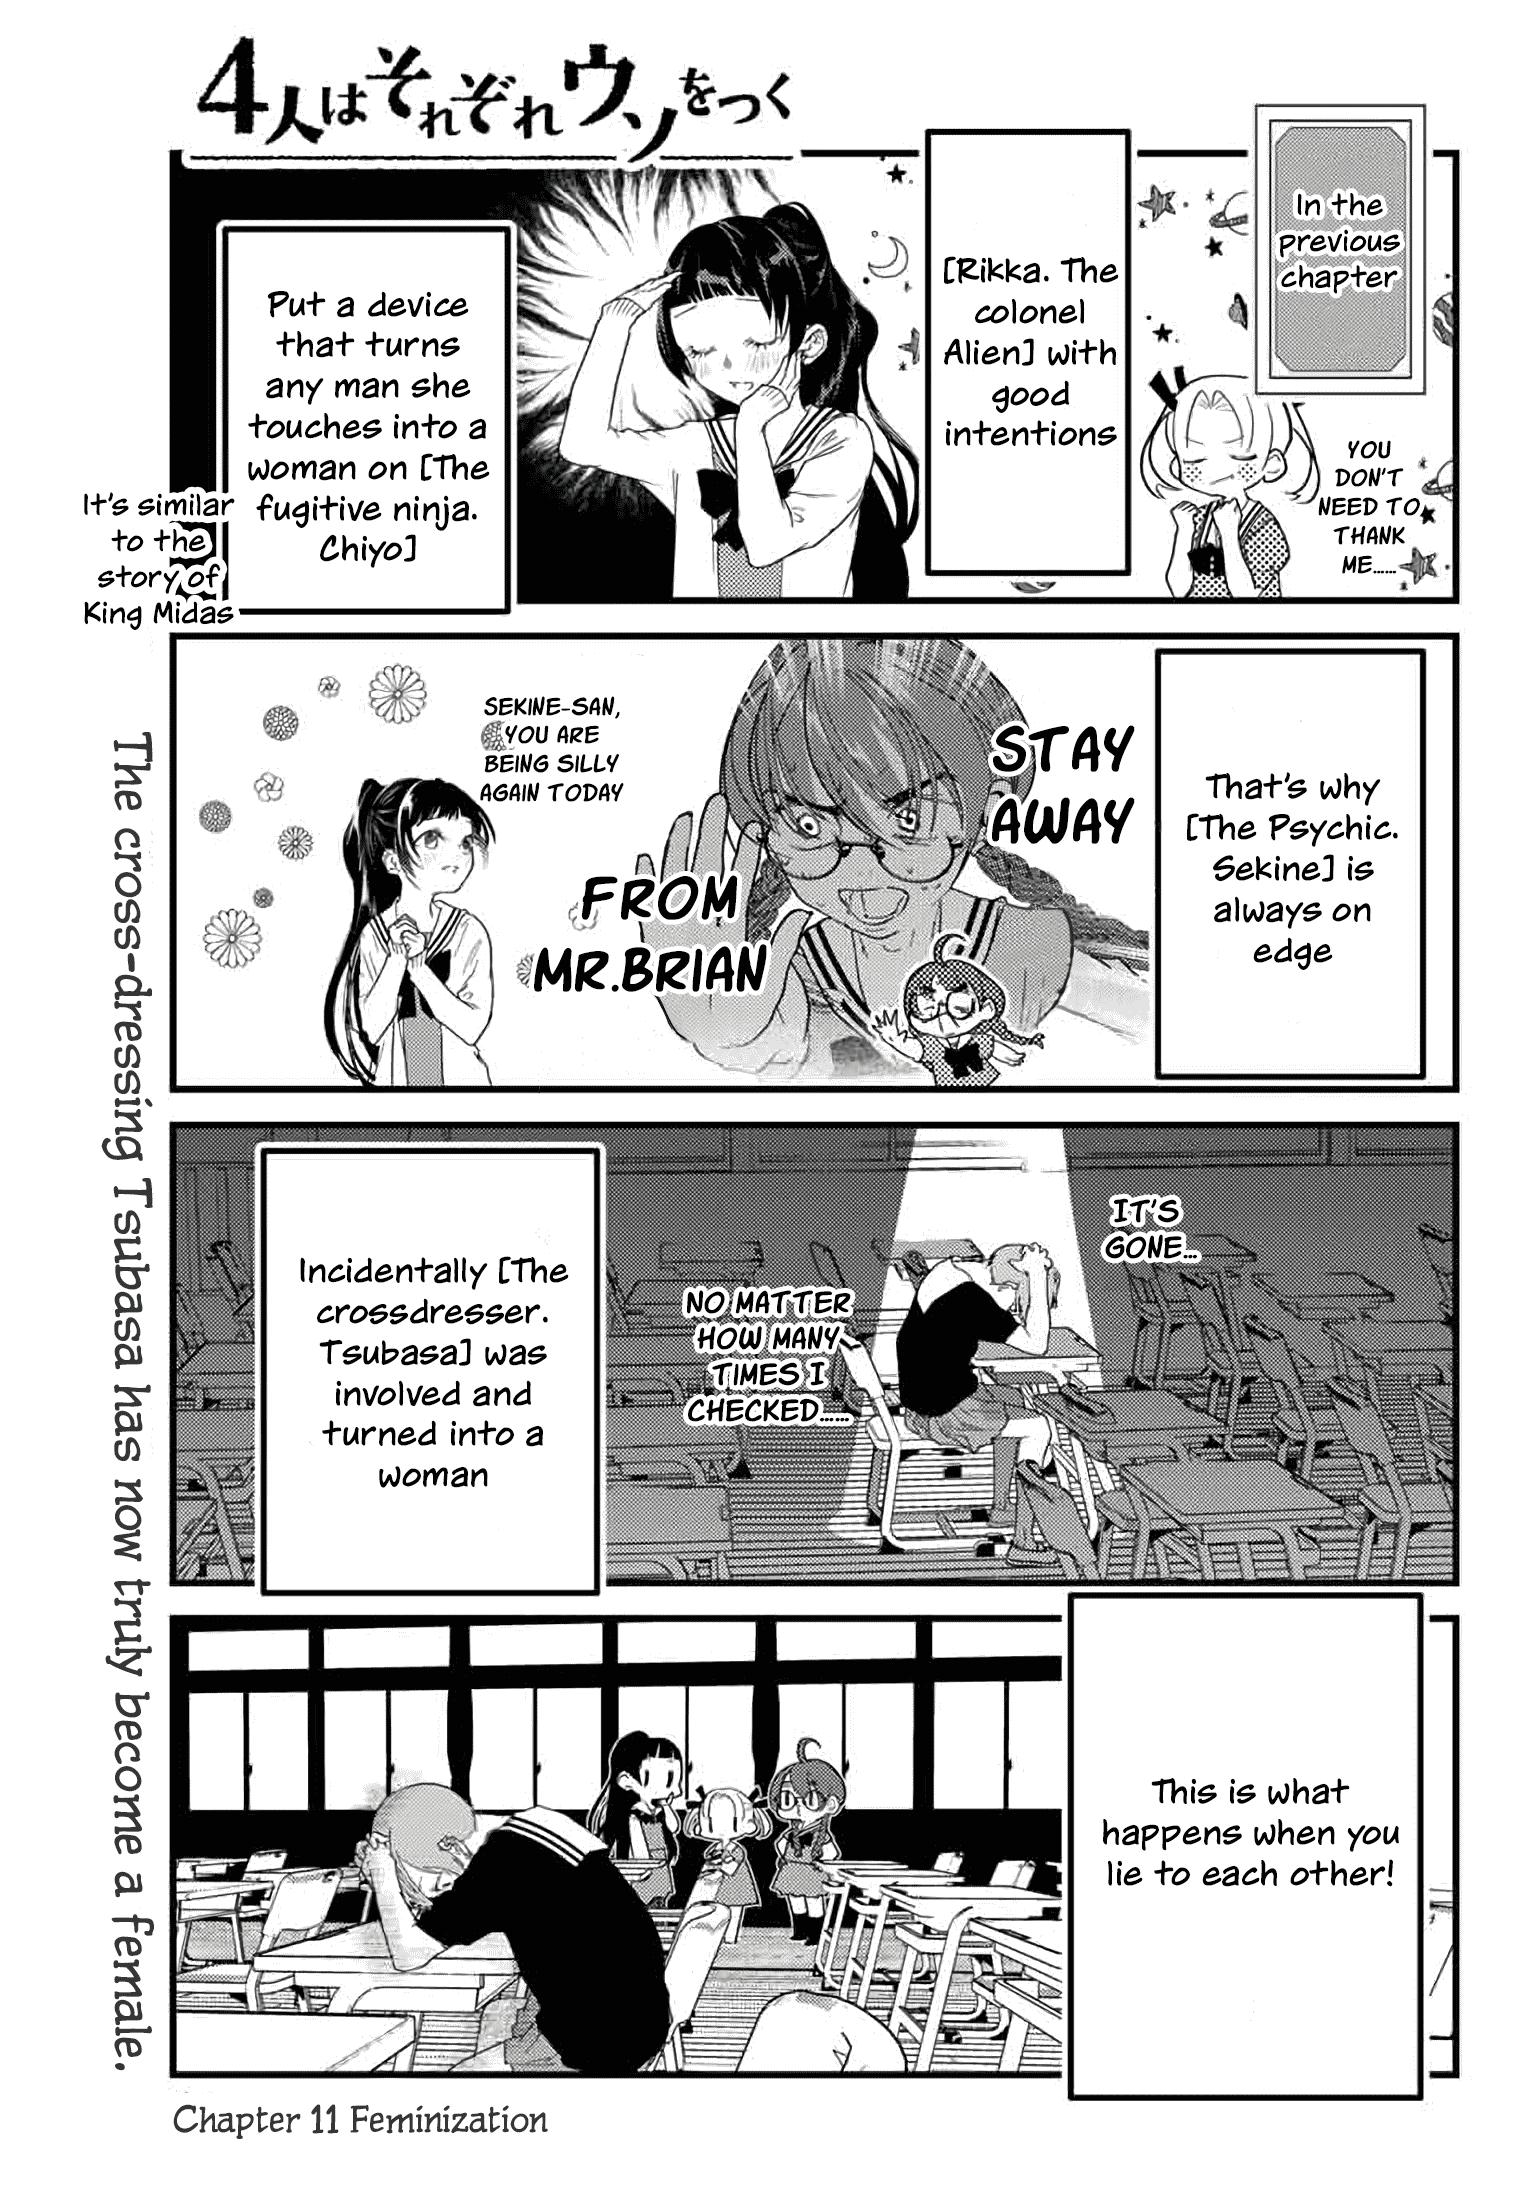 Feminization manga